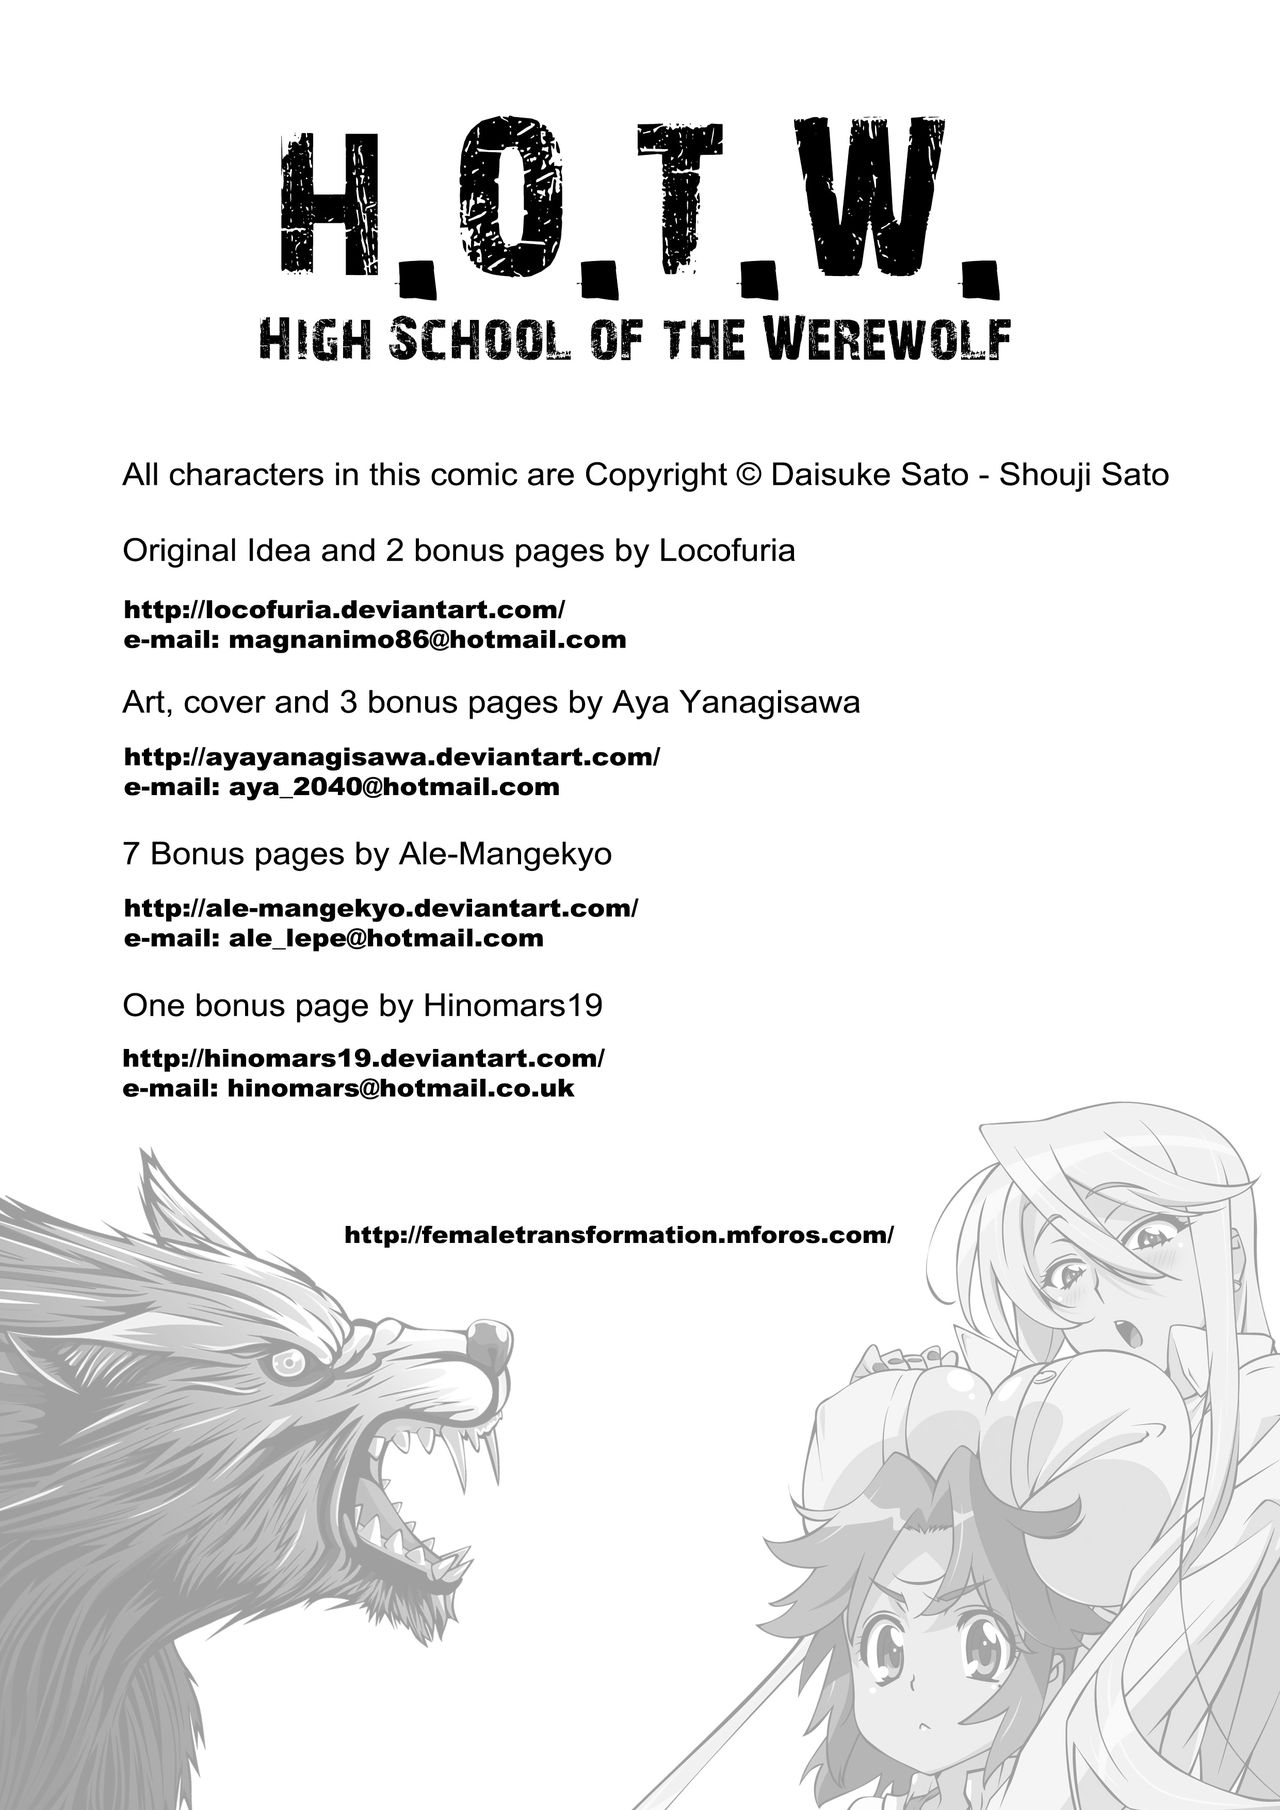 Highschool of the werewolf